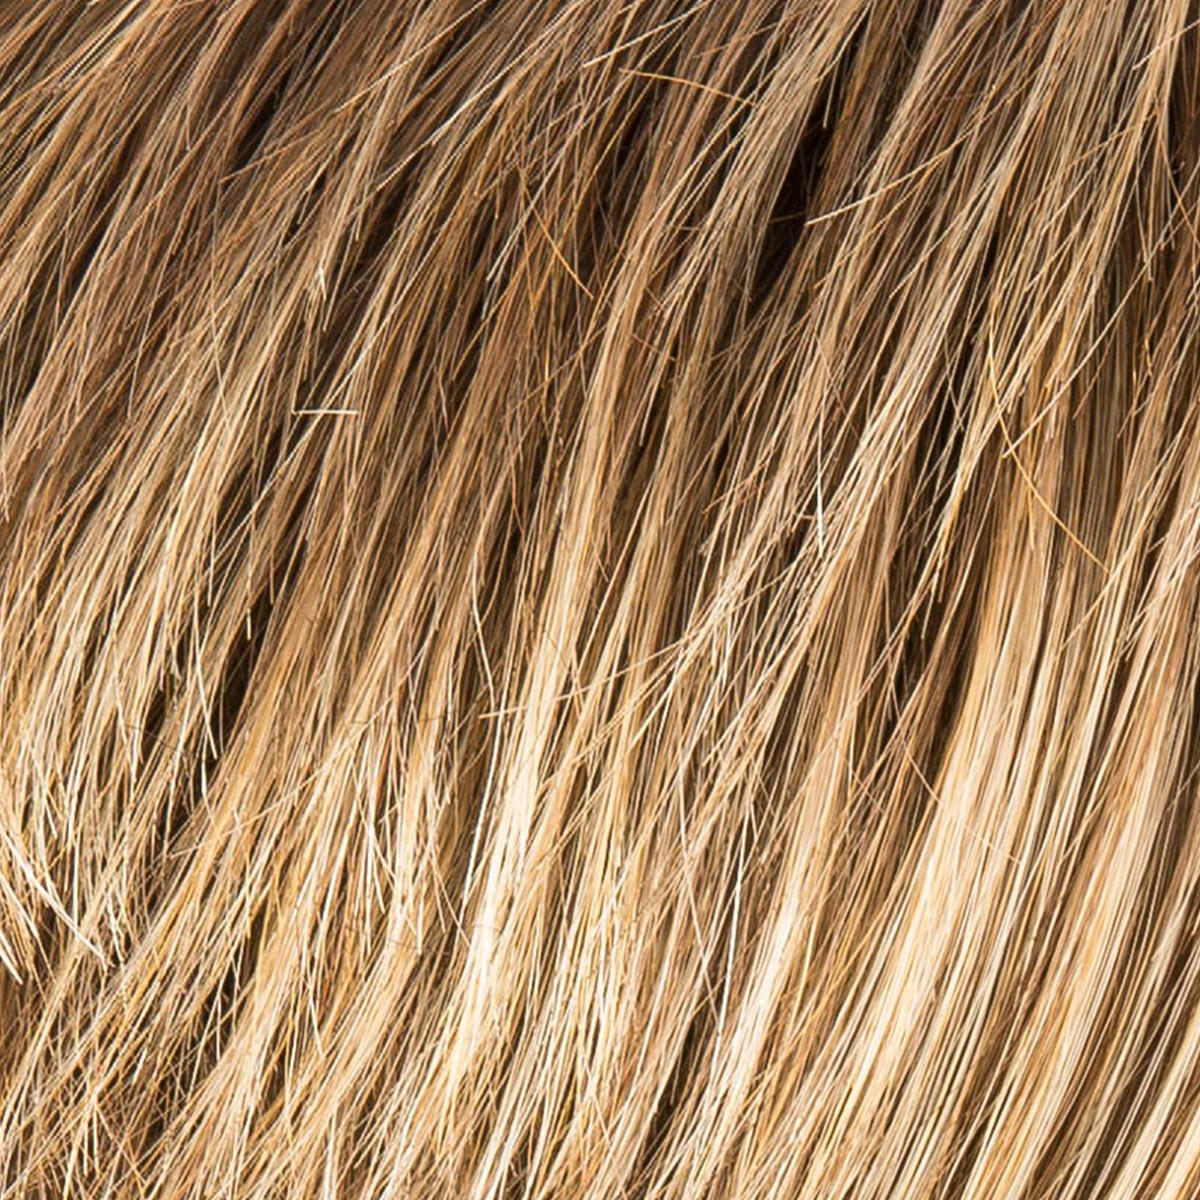 Ellen Wille Synthetic hair wig Open bernstein rooted - 2